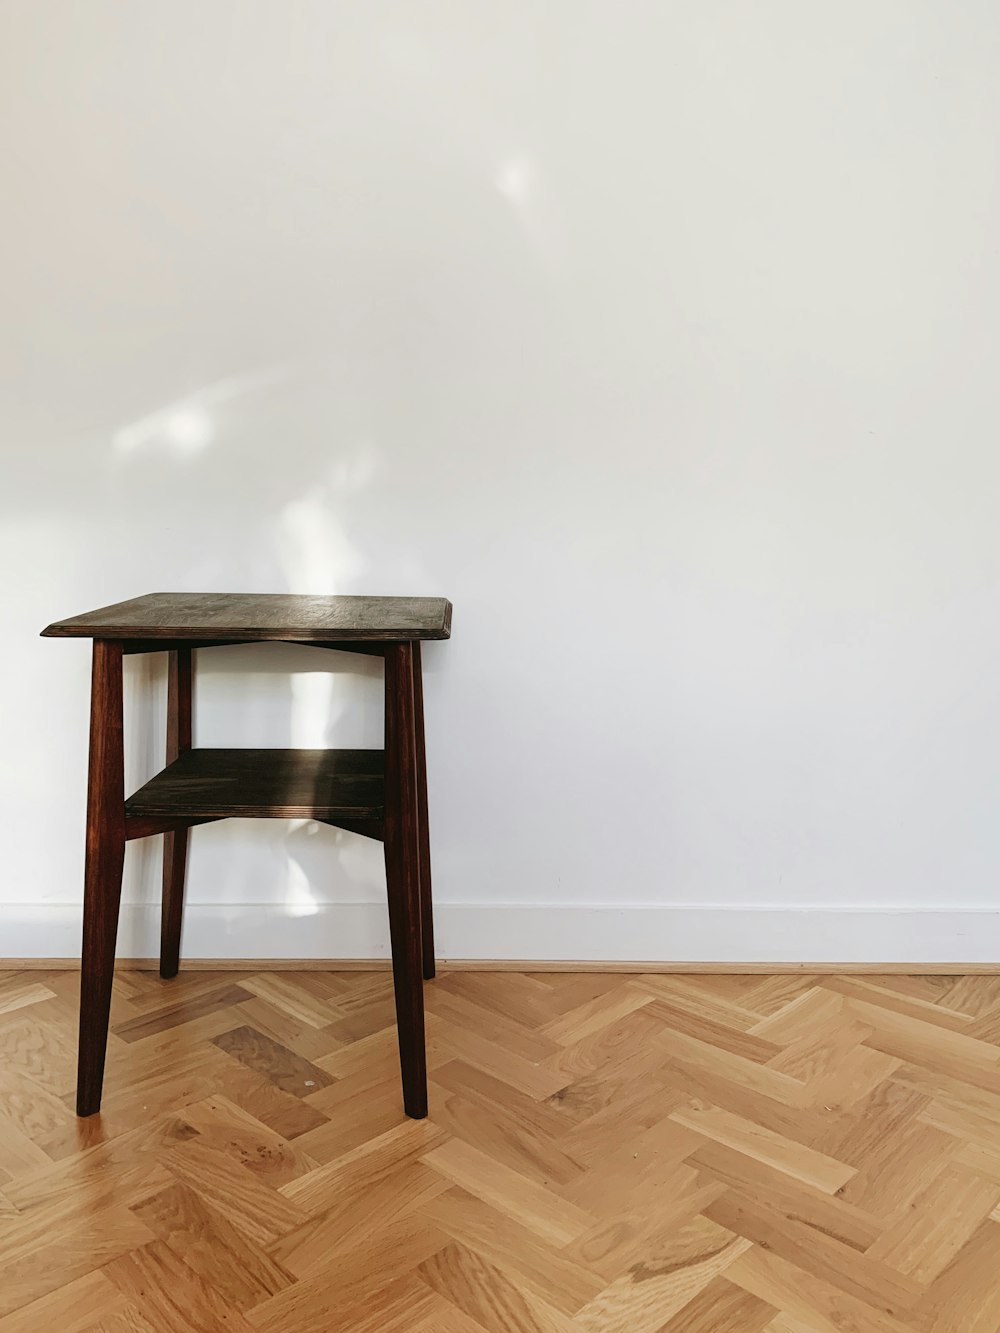 brown wooden seat on brown wooden parquet floor